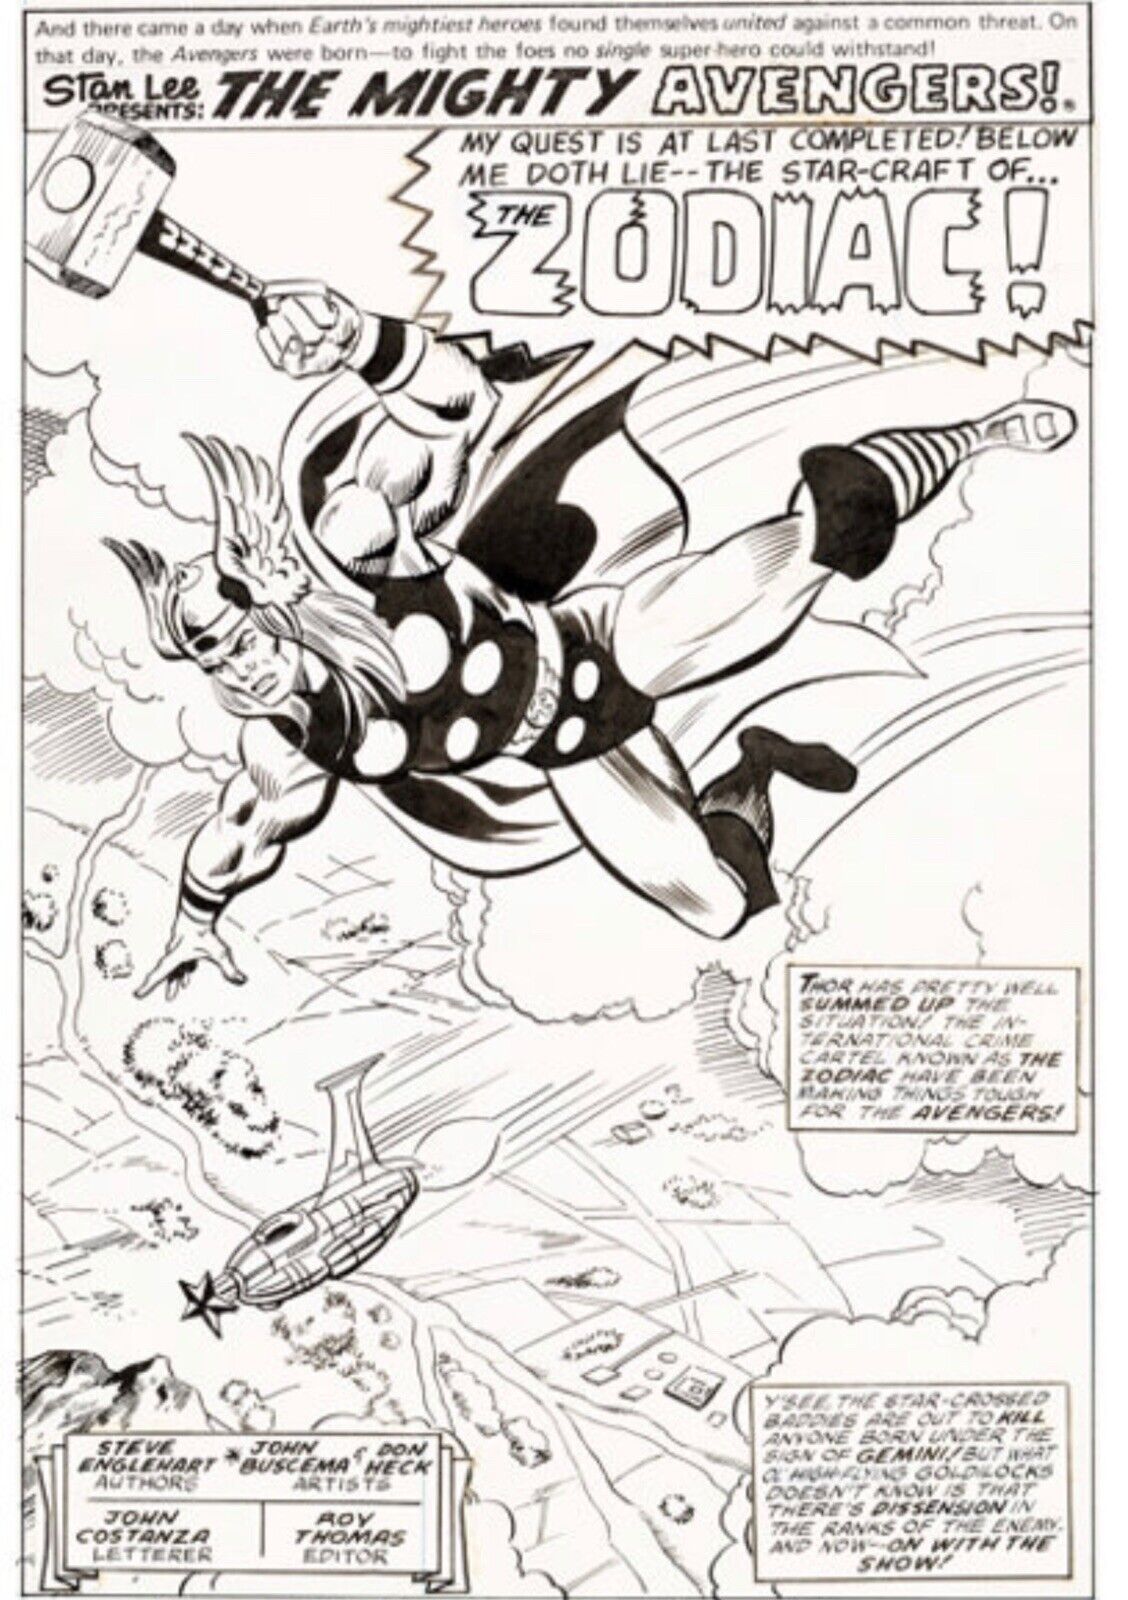 Original Splash Page Thor 1977 Steve Stiles & Mike Esposito Súper Spider Man UK